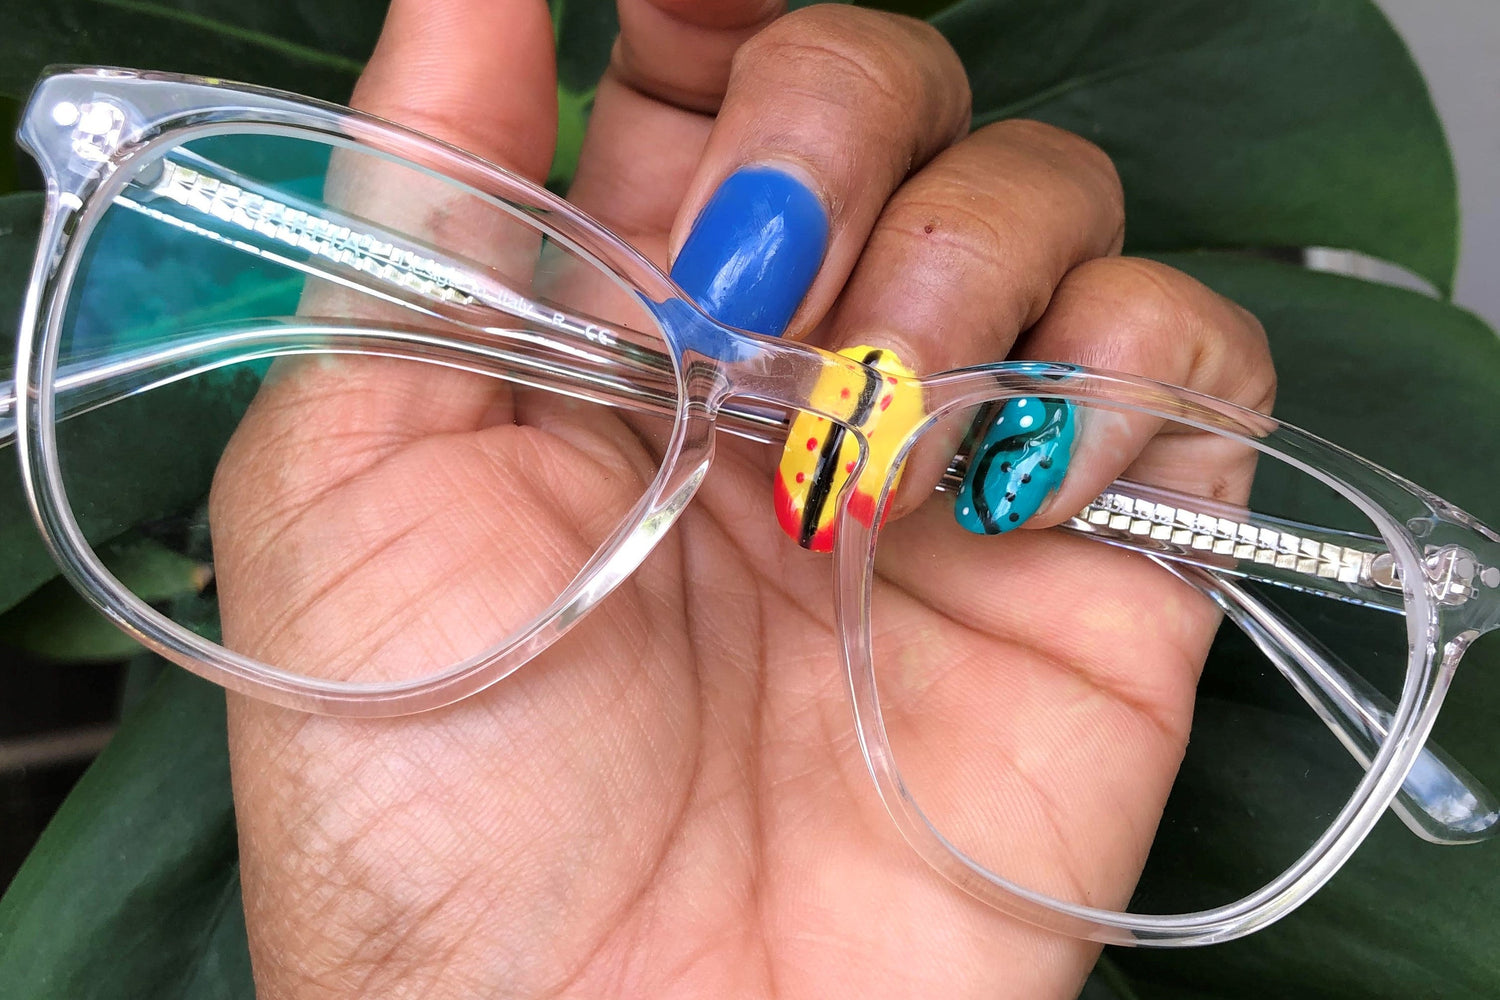 can you order prescription eyeglasses online? | KOALAEYE OPTICAL